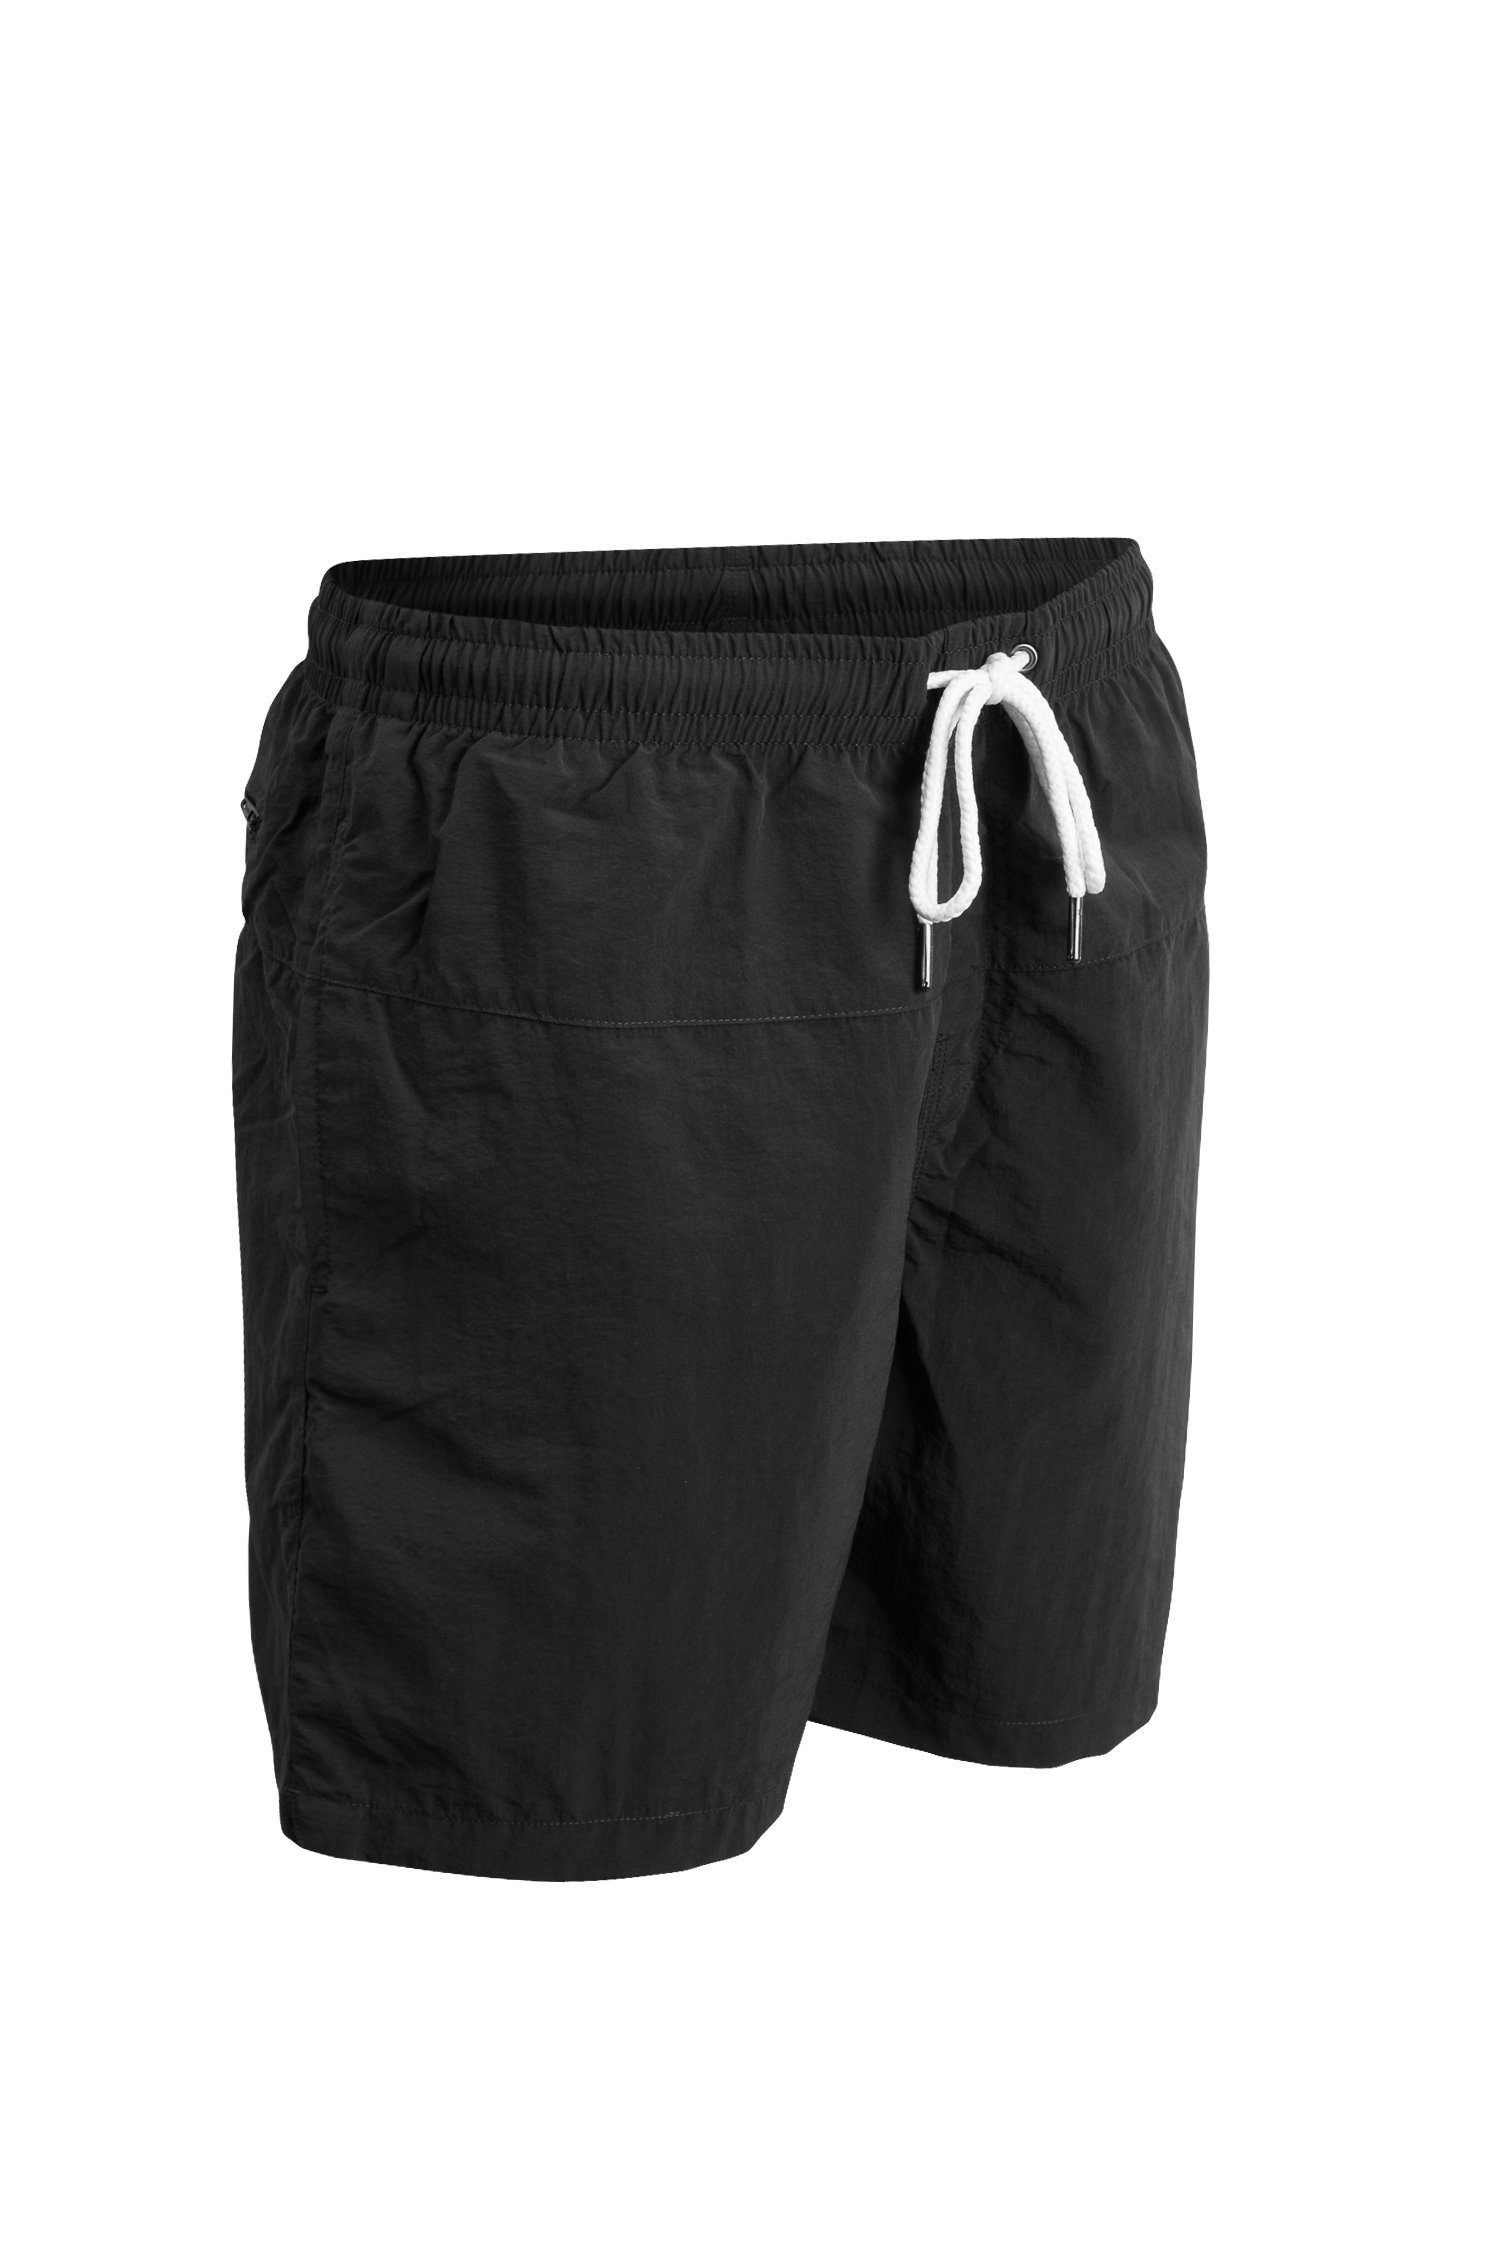 Black Swim schnelltrocknend Badehosen Manufaktur13 Badeshorts Shorts Out -